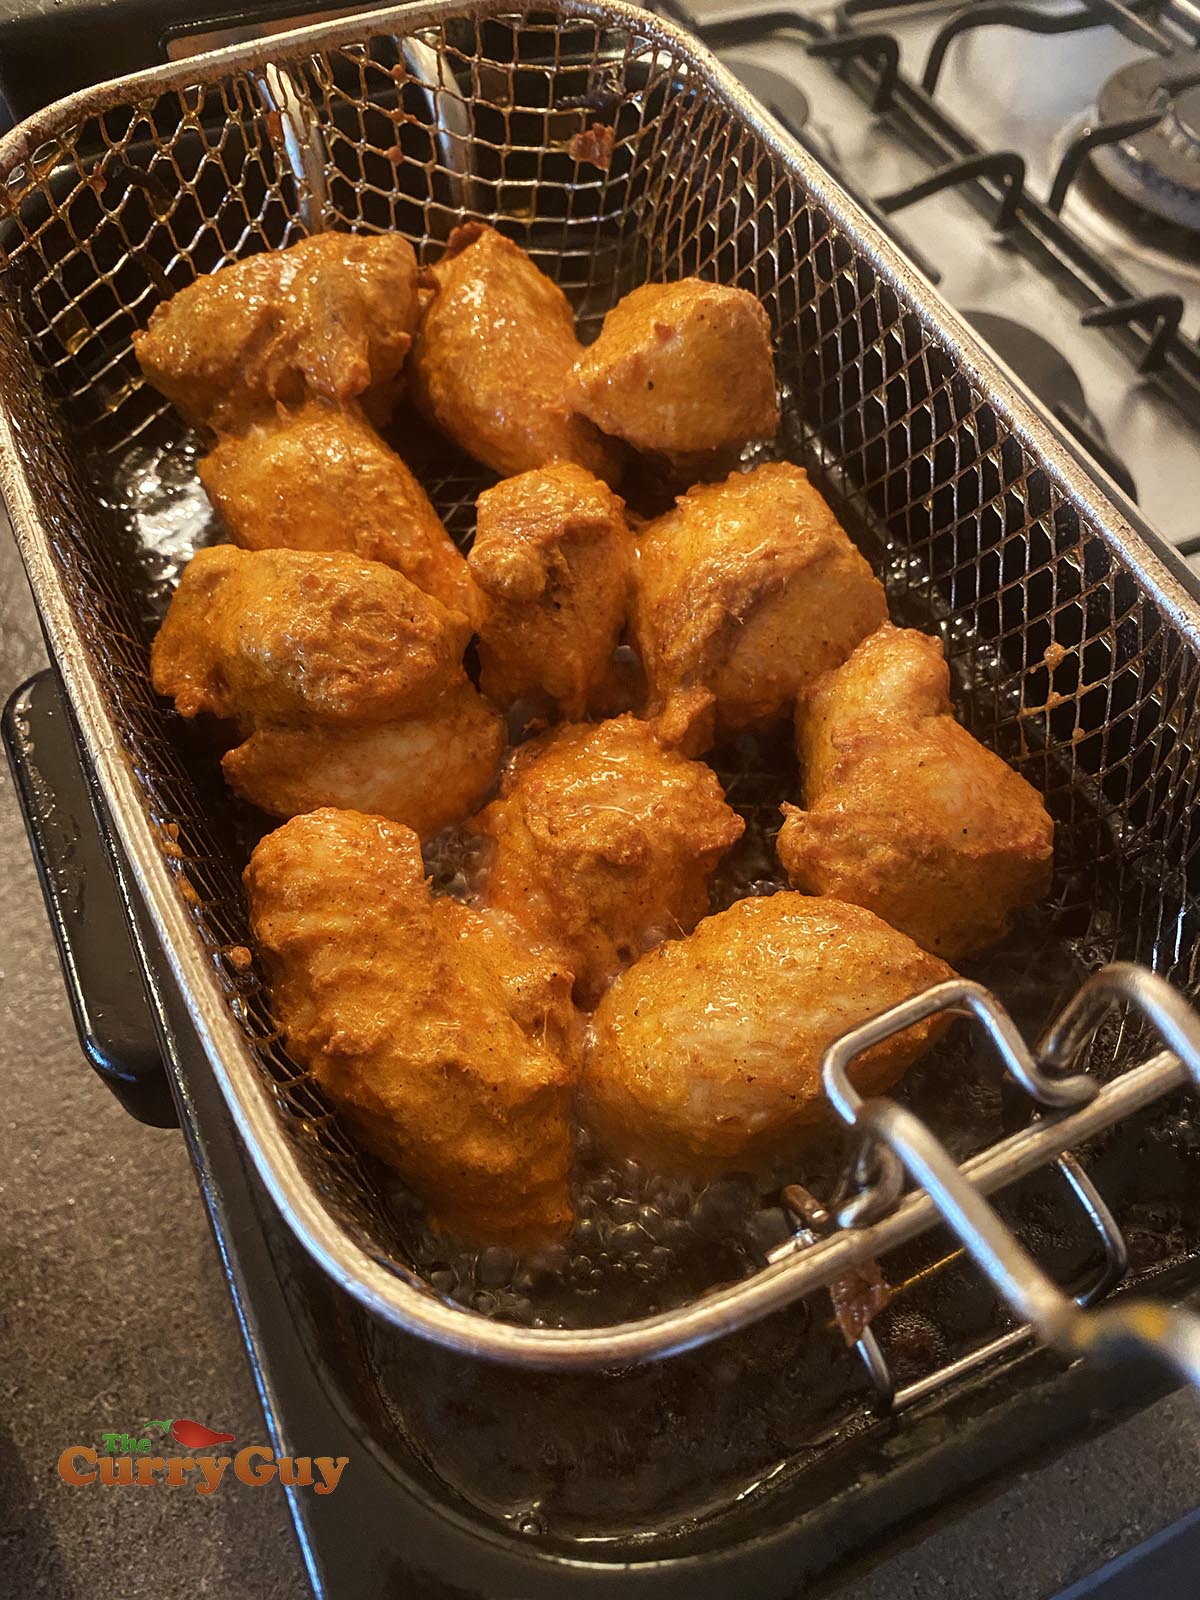 Fried chicken pieces